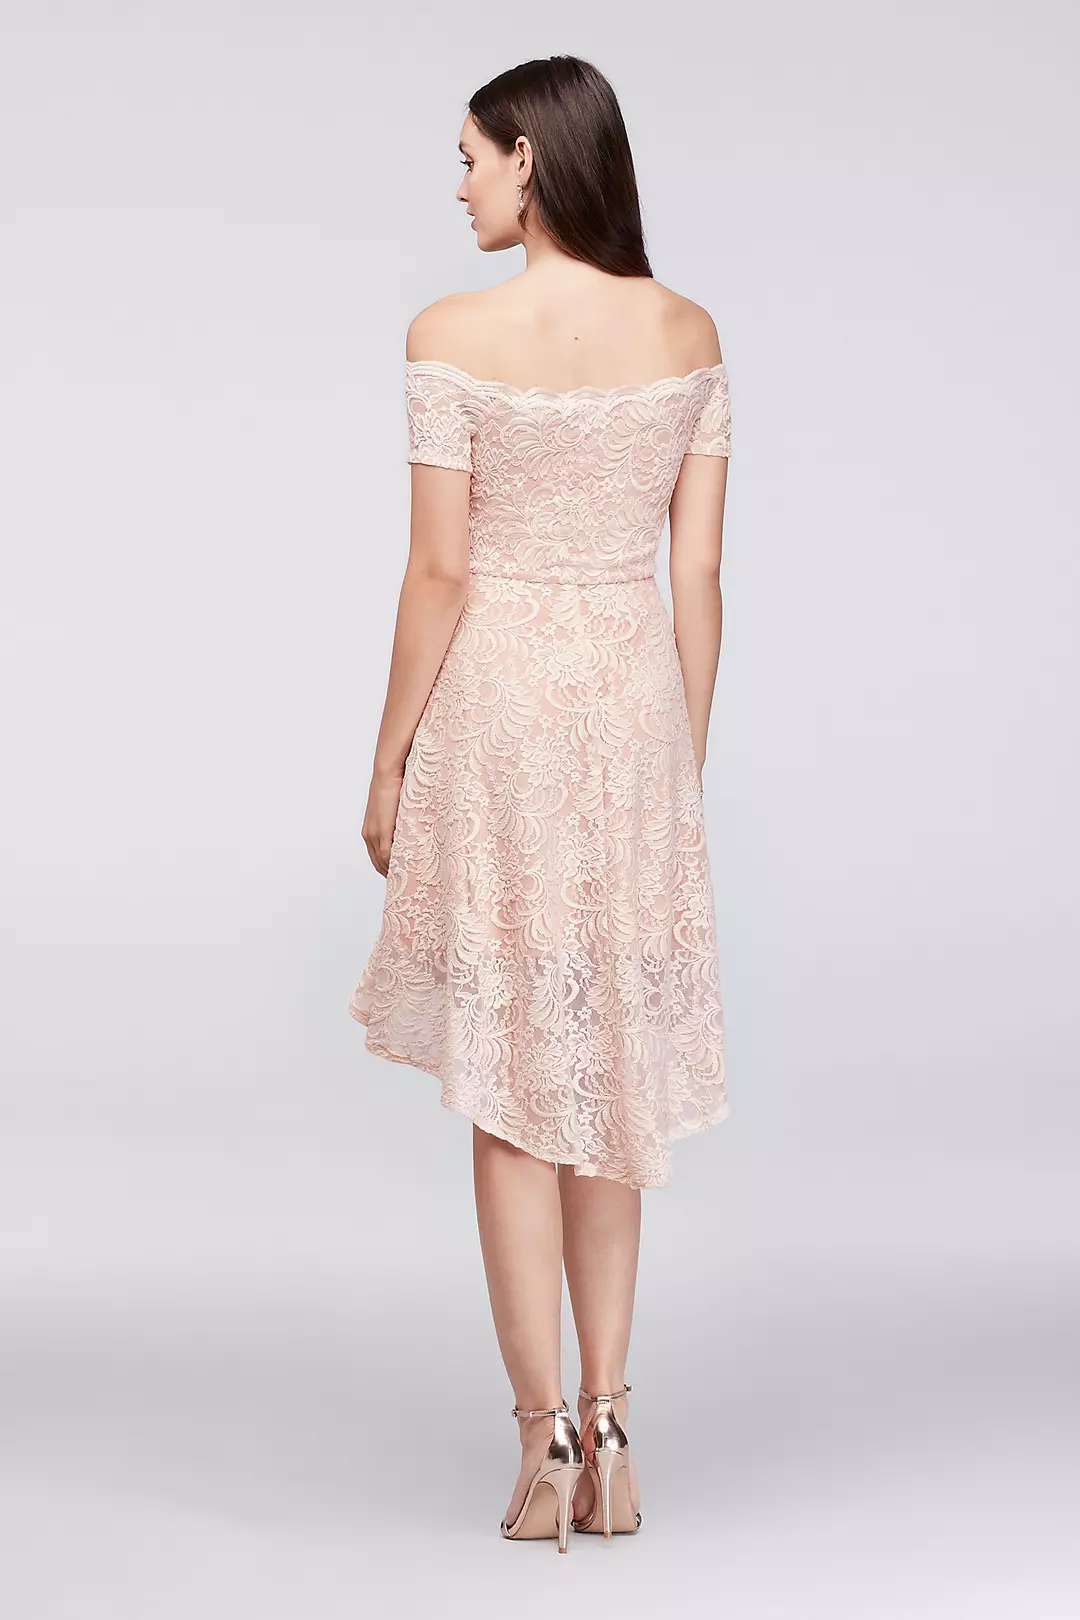 Off-the-Shoulder Lace High-Low Plus Size Dress Image 2